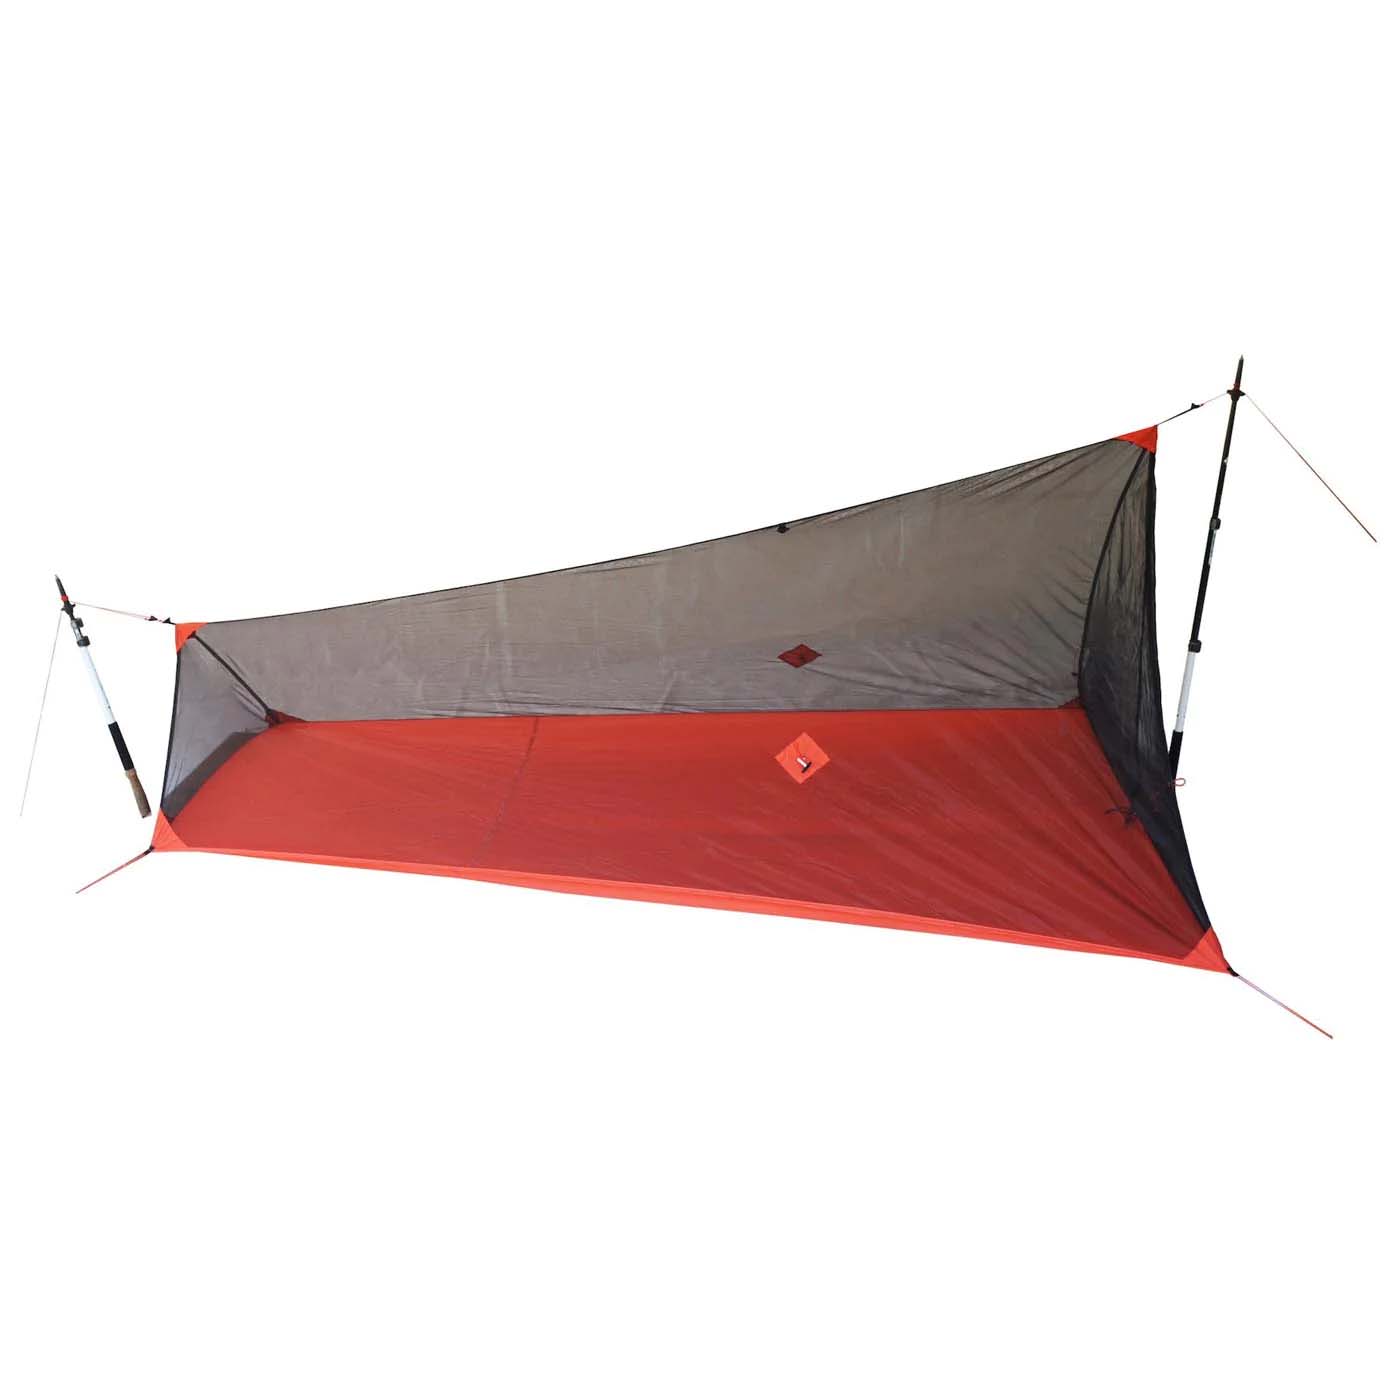 Slingfin SplitWing UL Tarp & Mesh Inner Ultralight Hiking Tent Combo